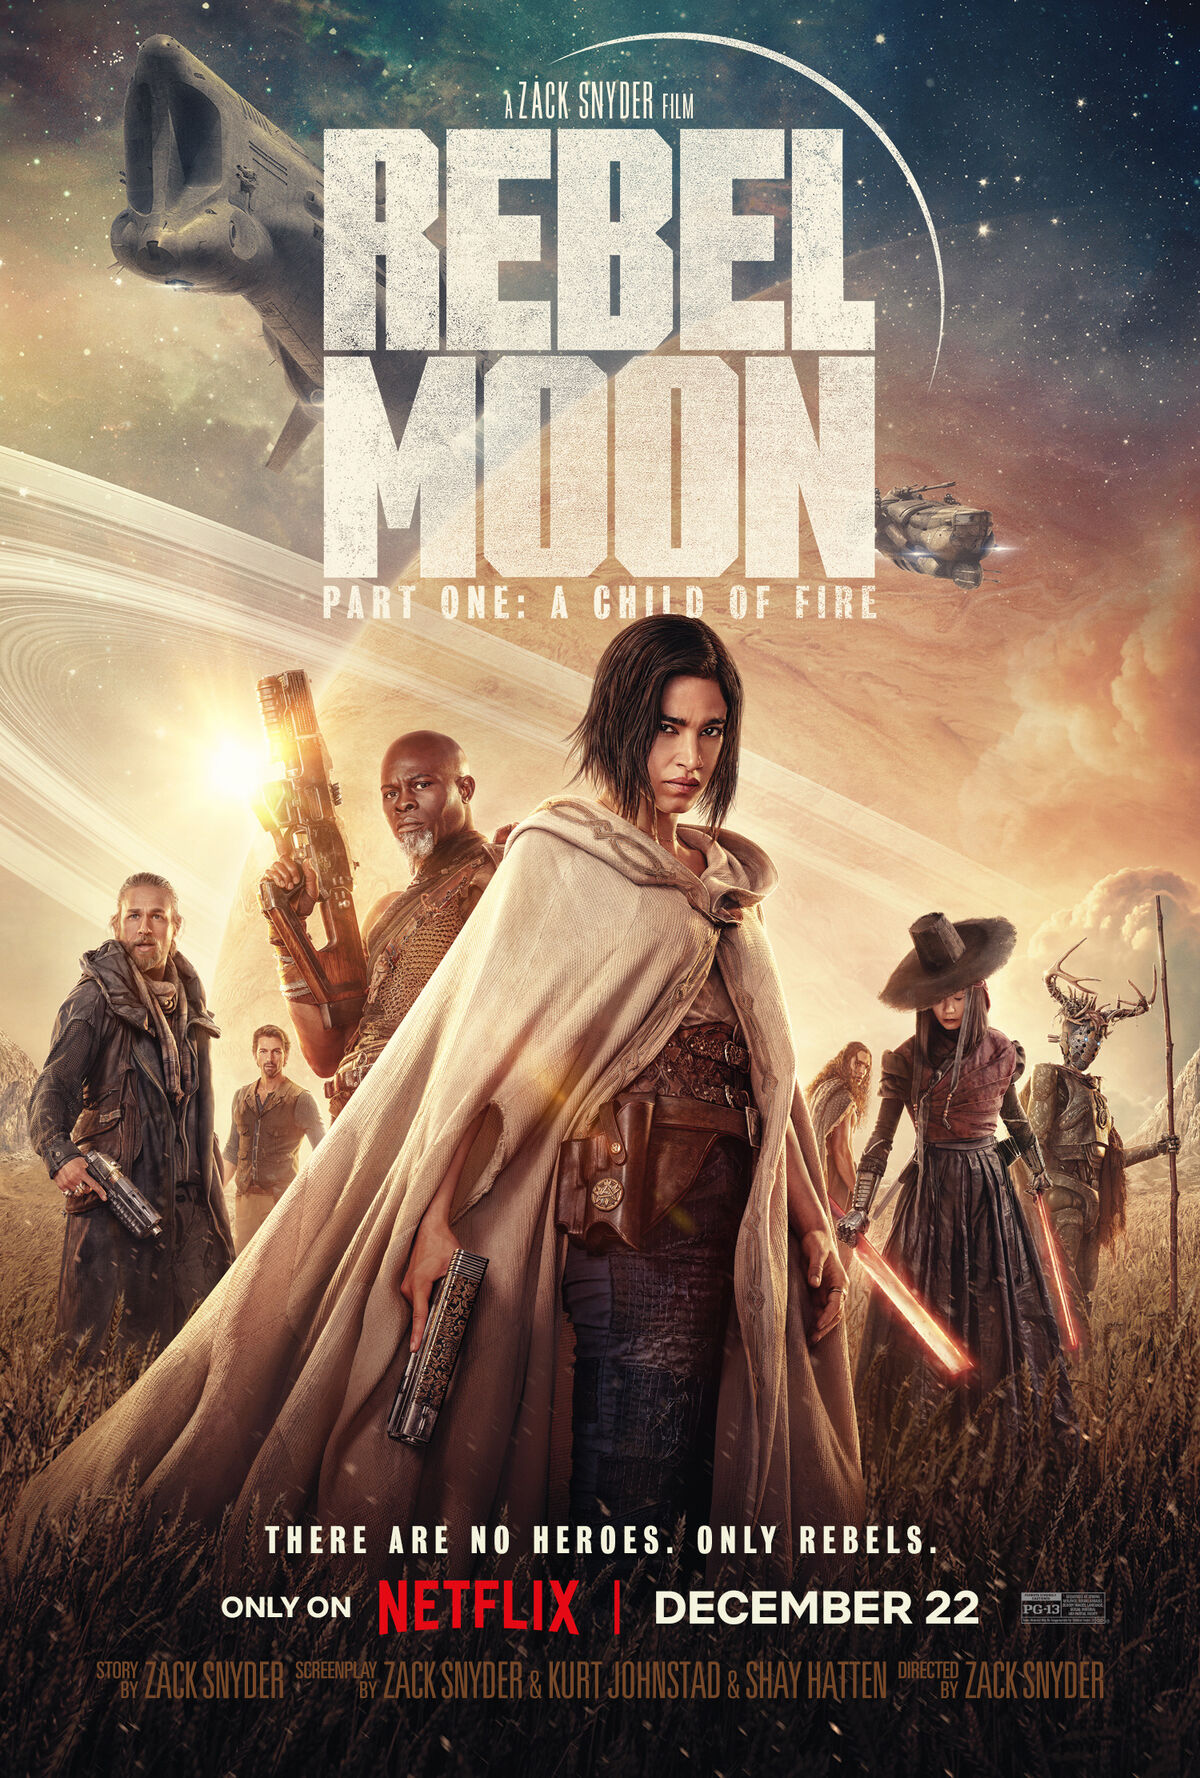 Rebel Moon game release date speculation, developer, more